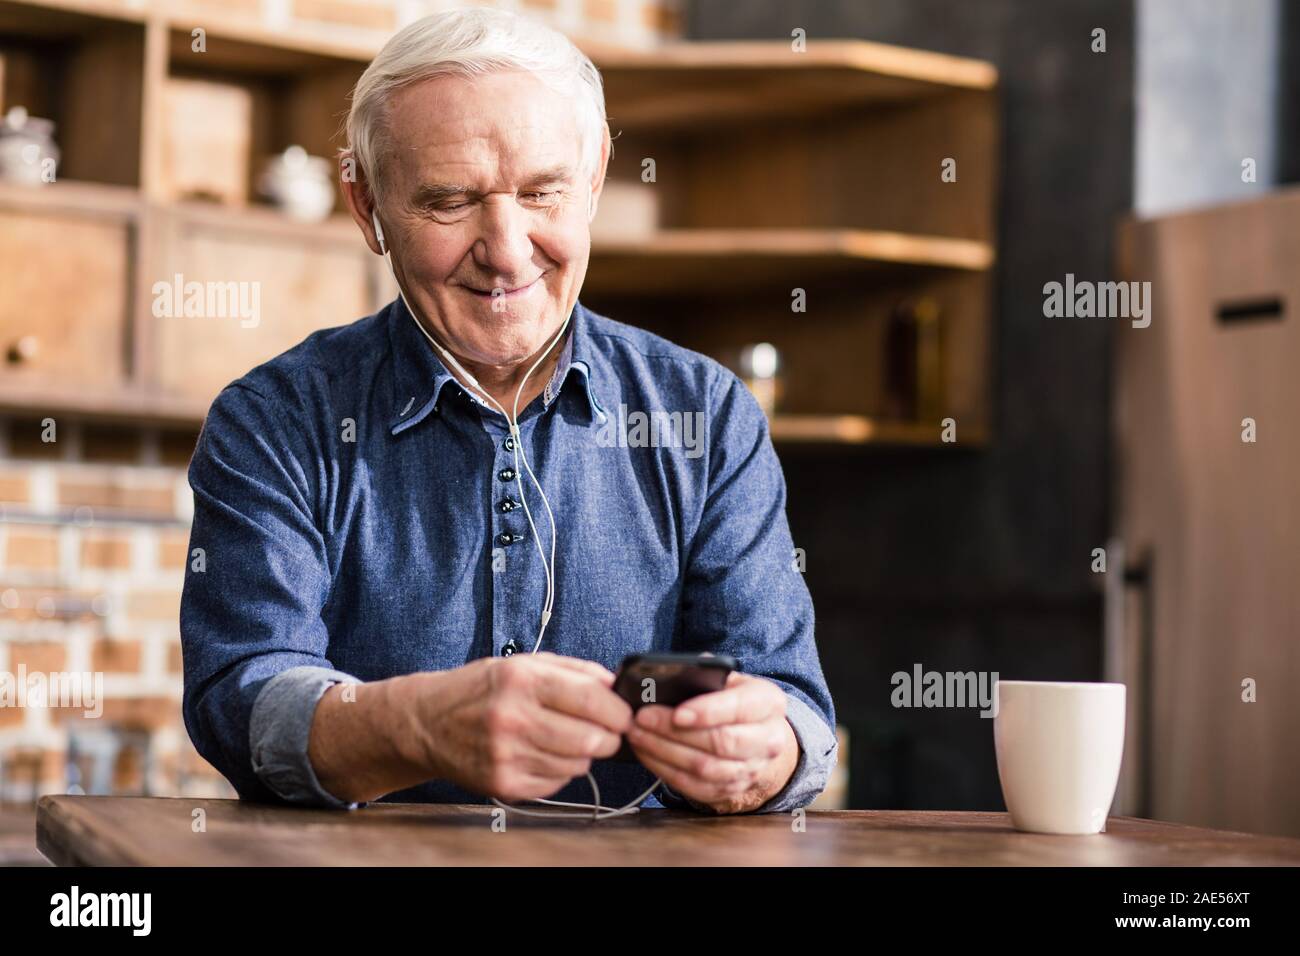 Happy aged man using his phone Stock Photo